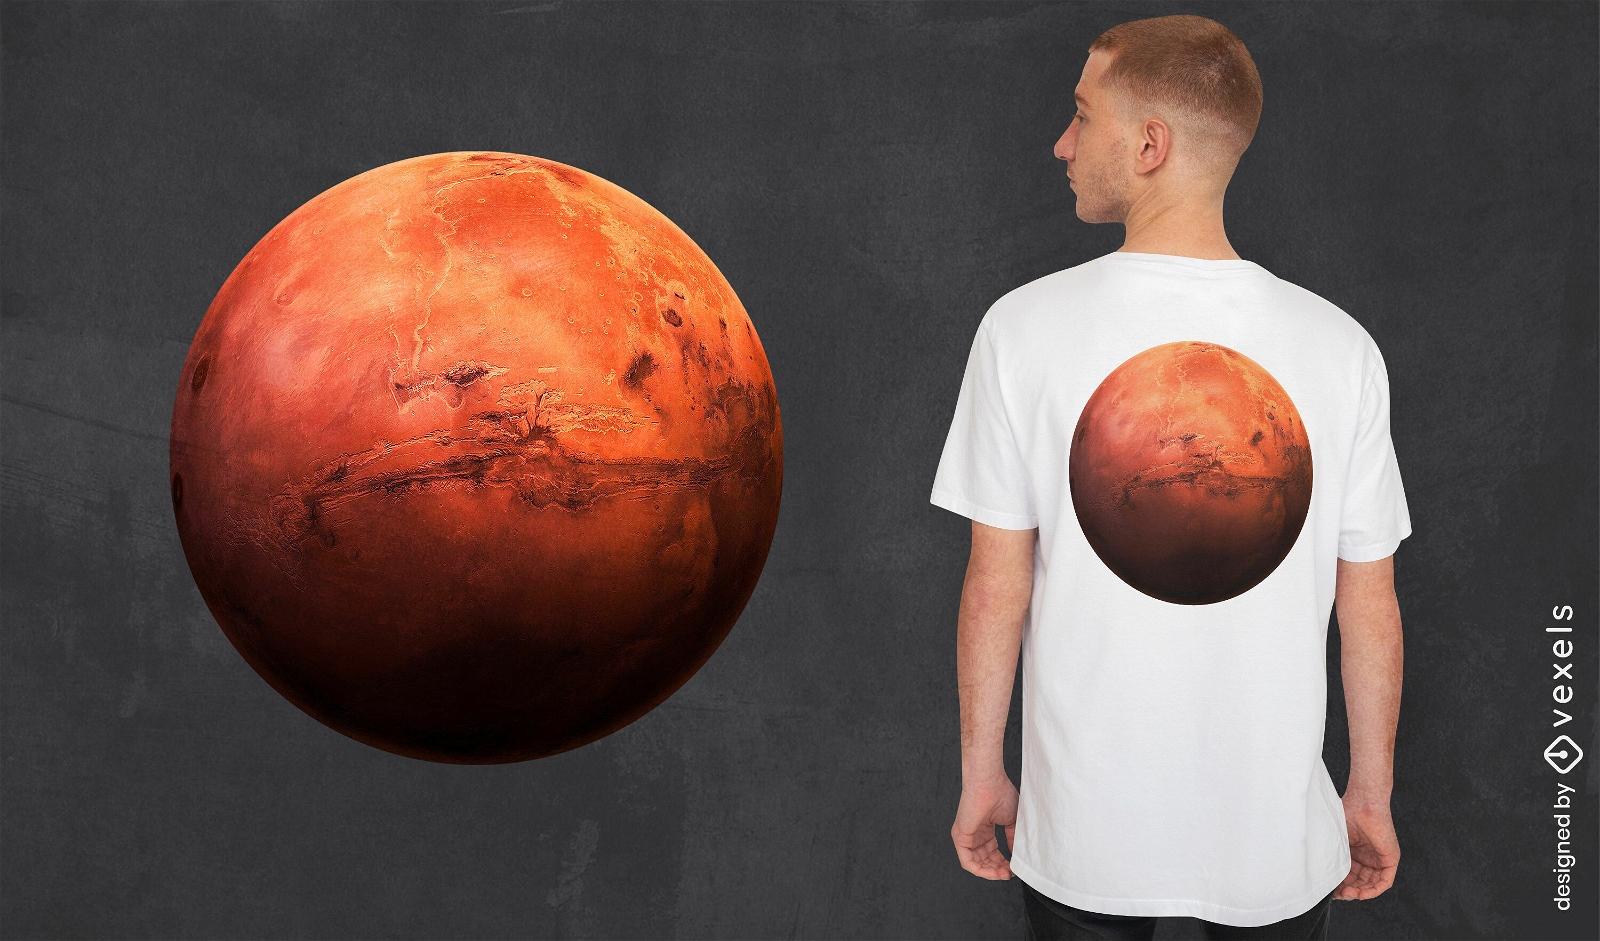 Dise?o de camiseta realista del planeta Marte.